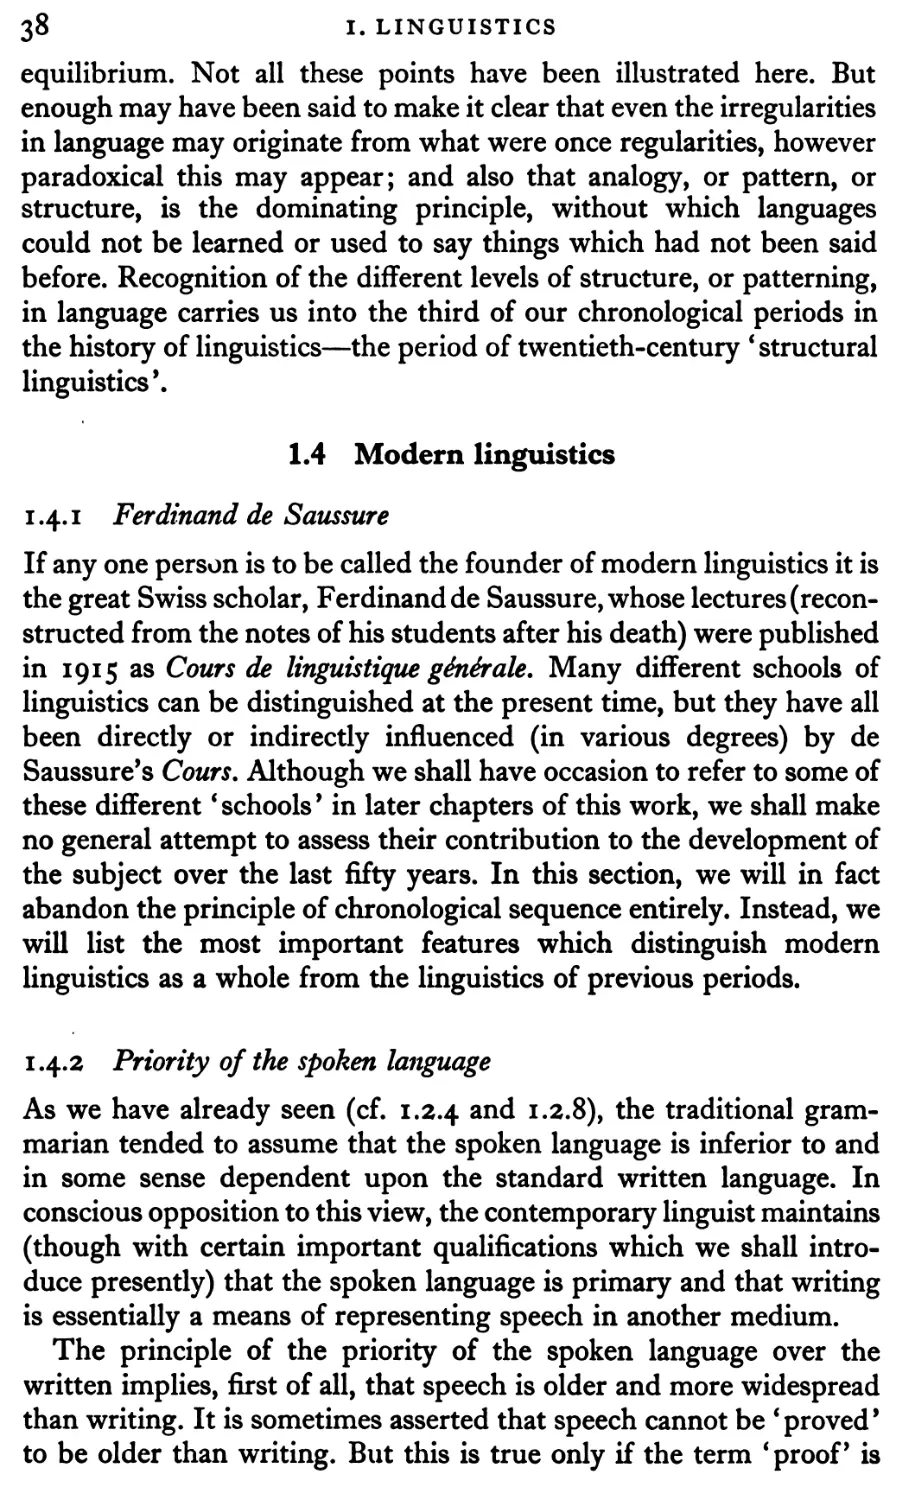 1.4 Modern linguistics